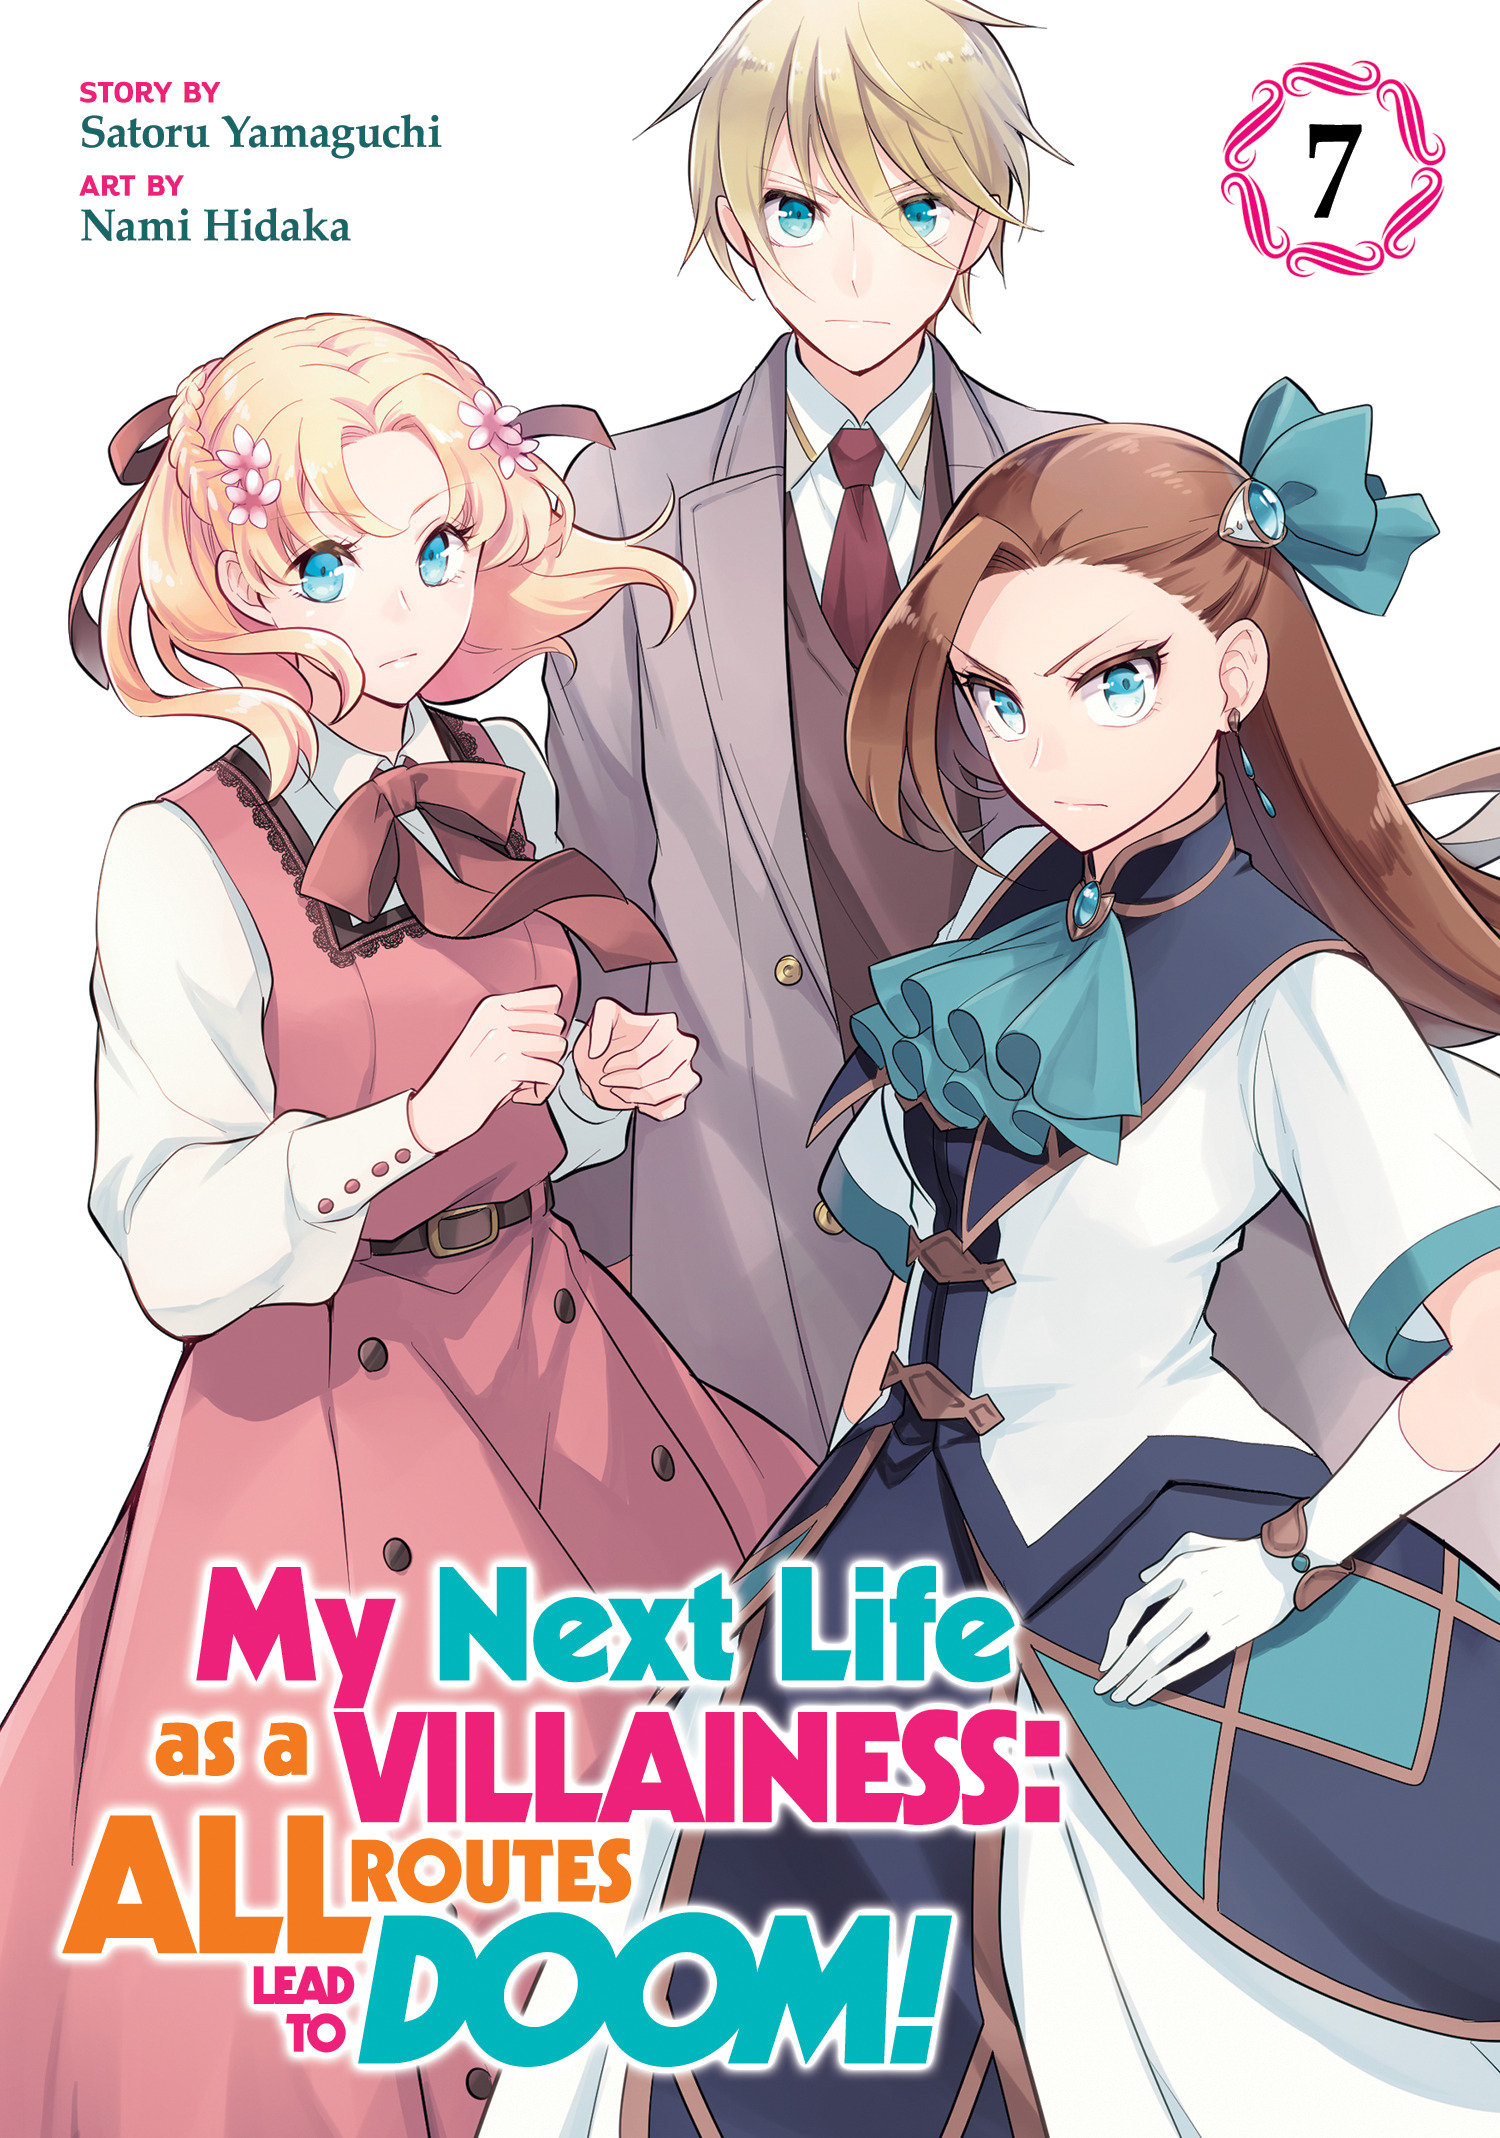 My Next Life as a Villainess Manga Volume 7